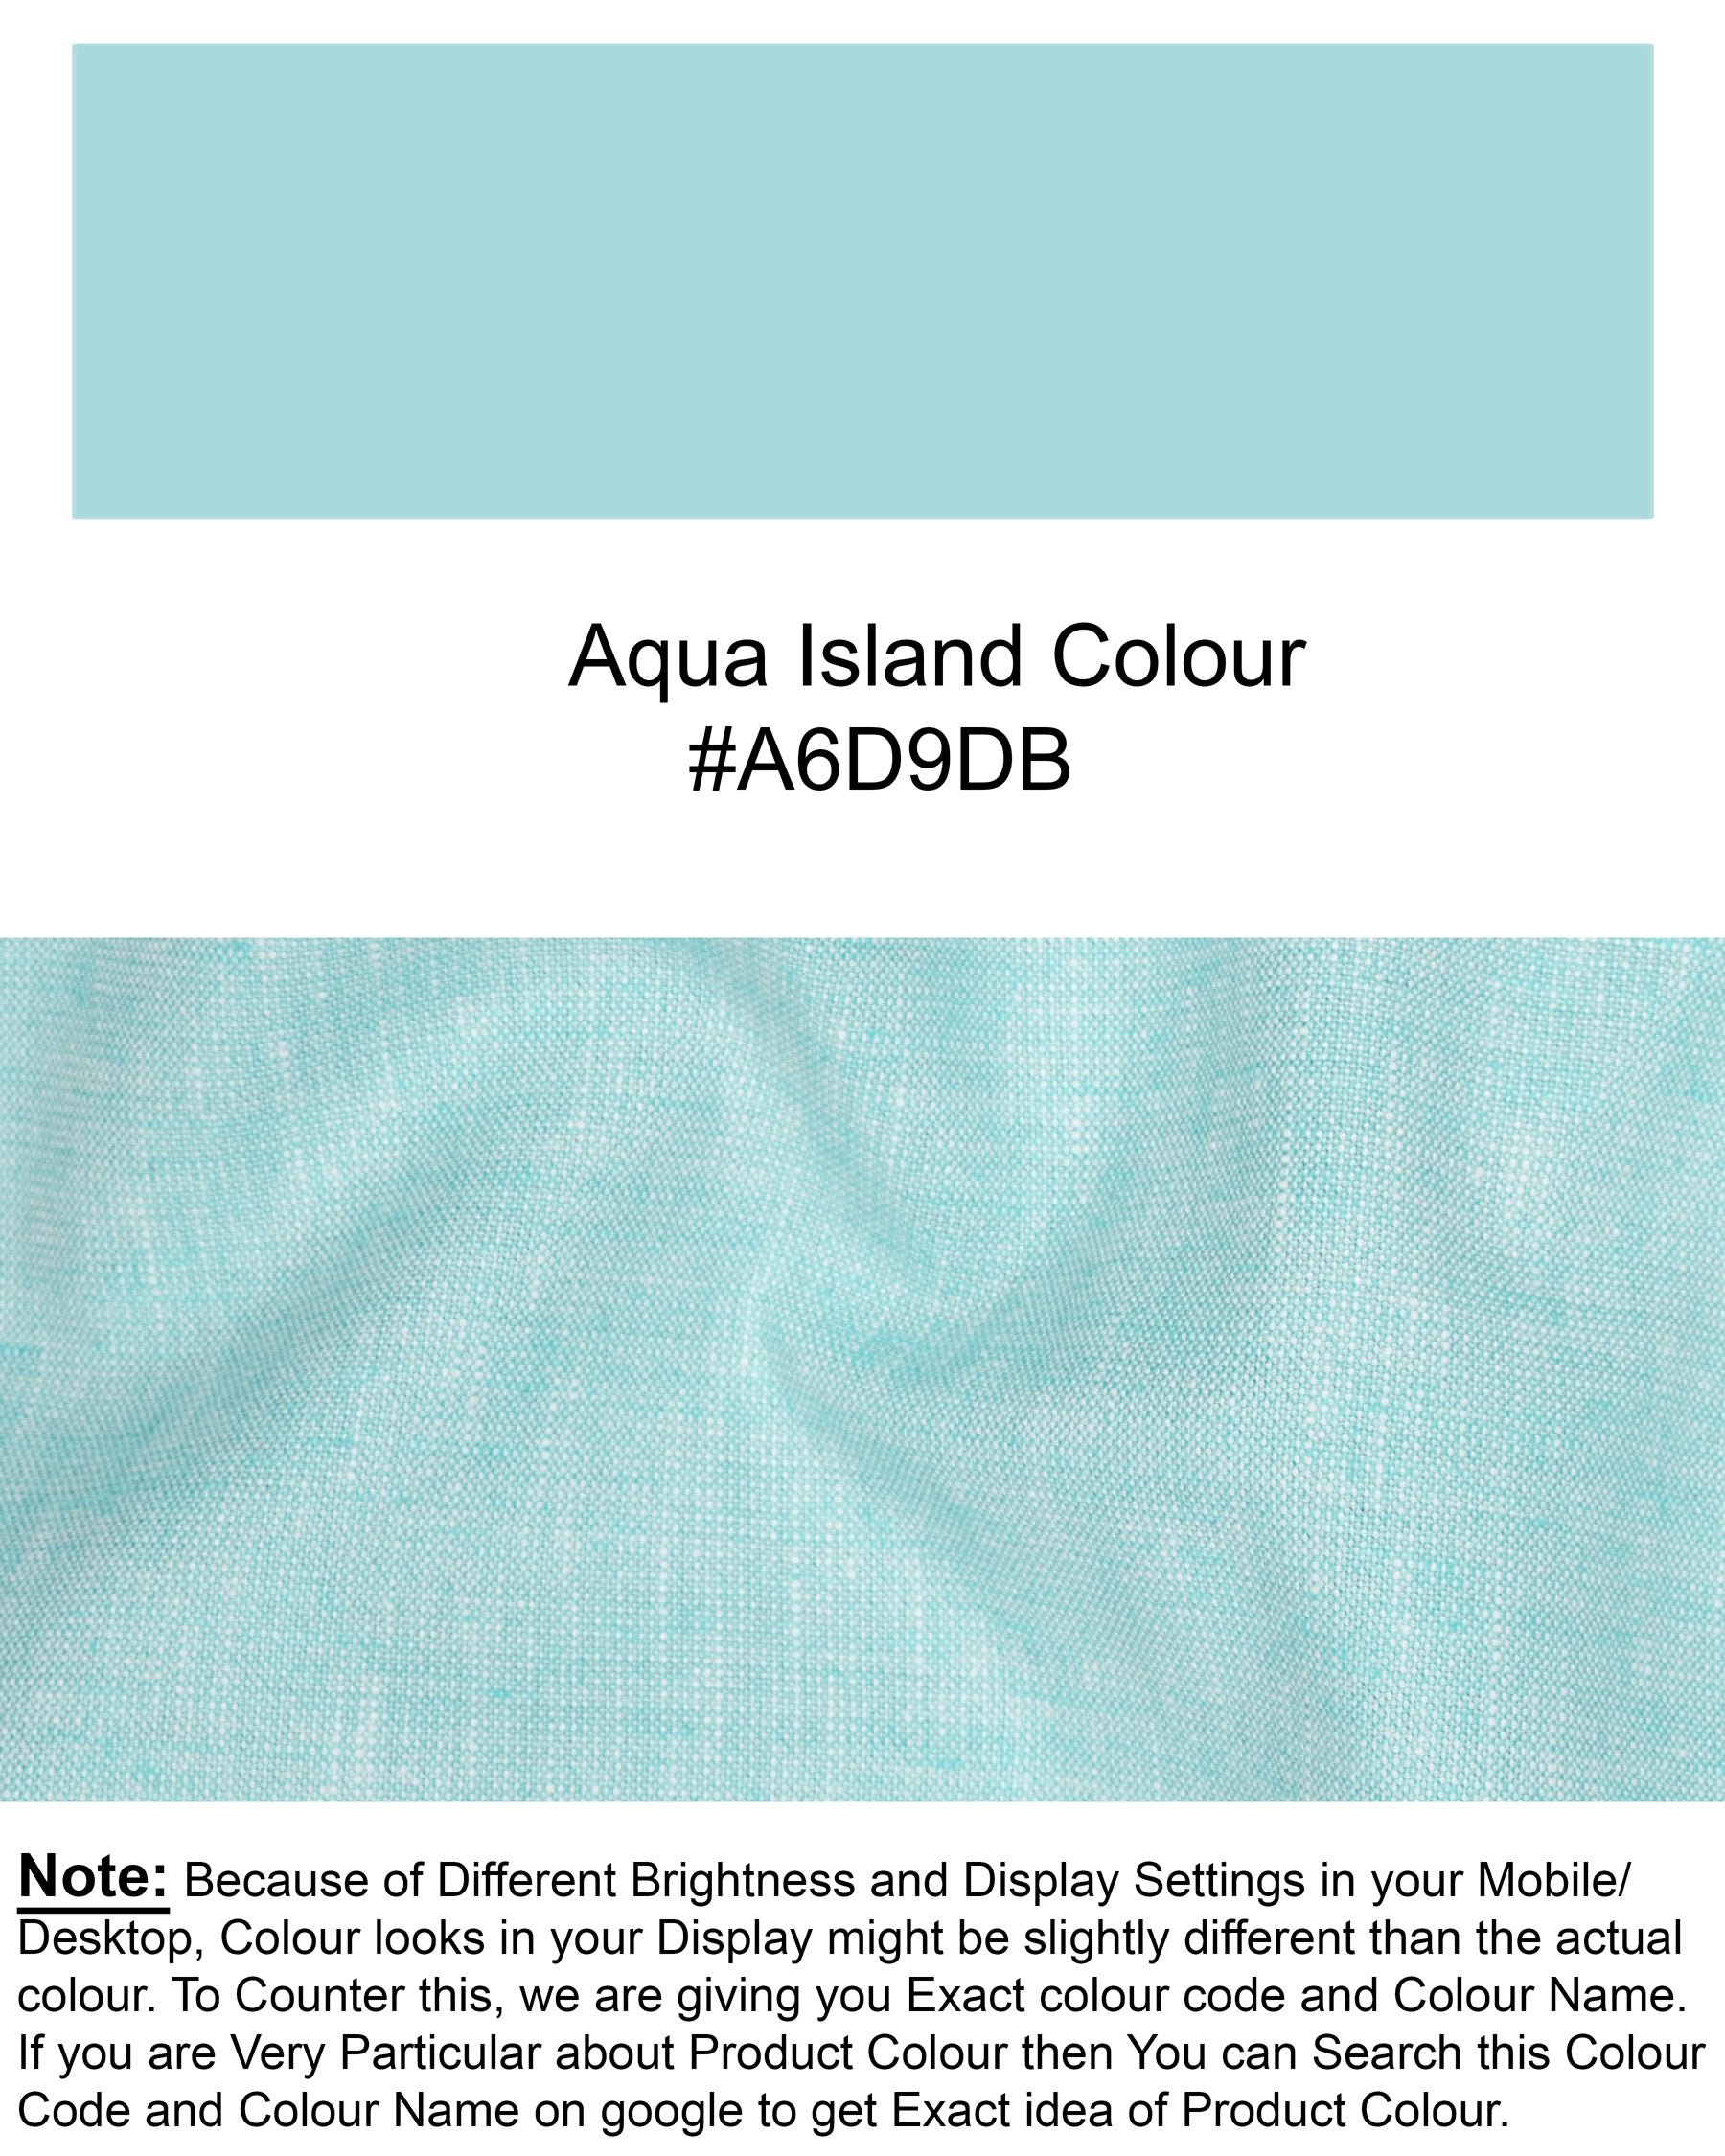 Aqua Island Blue Double Breasted Luxurious Linen Suit ST1542-DB-PP-36, ST1542-DB-PP-38, ST1542-DB-PP-40, ST1542-DB-PP-42, ST1542-DB-PP-44, ST1542-DB-PP-46, ST1542-DB-PP-48, ST1542-DB-PP-50, ST1542-DB-PP-52, ST1542-DB-PP-54, ST1542-DB-PP-56, ST1542-DB-PP-58, ST1542-DB-PP-60